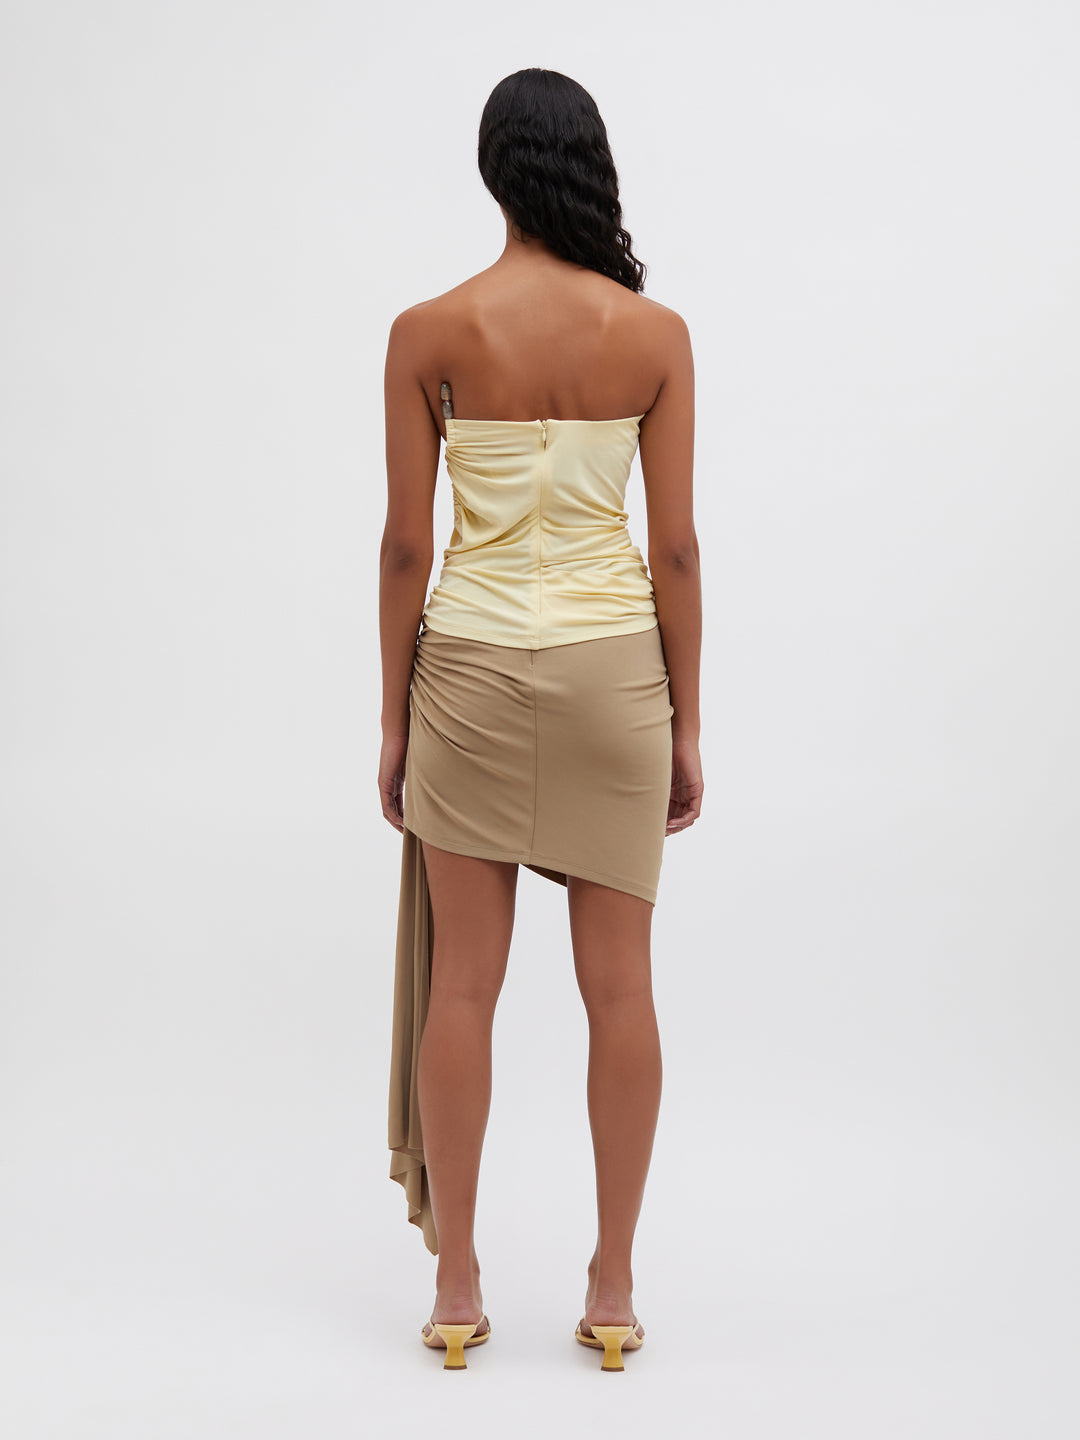 Arced Palm Micro Skirt